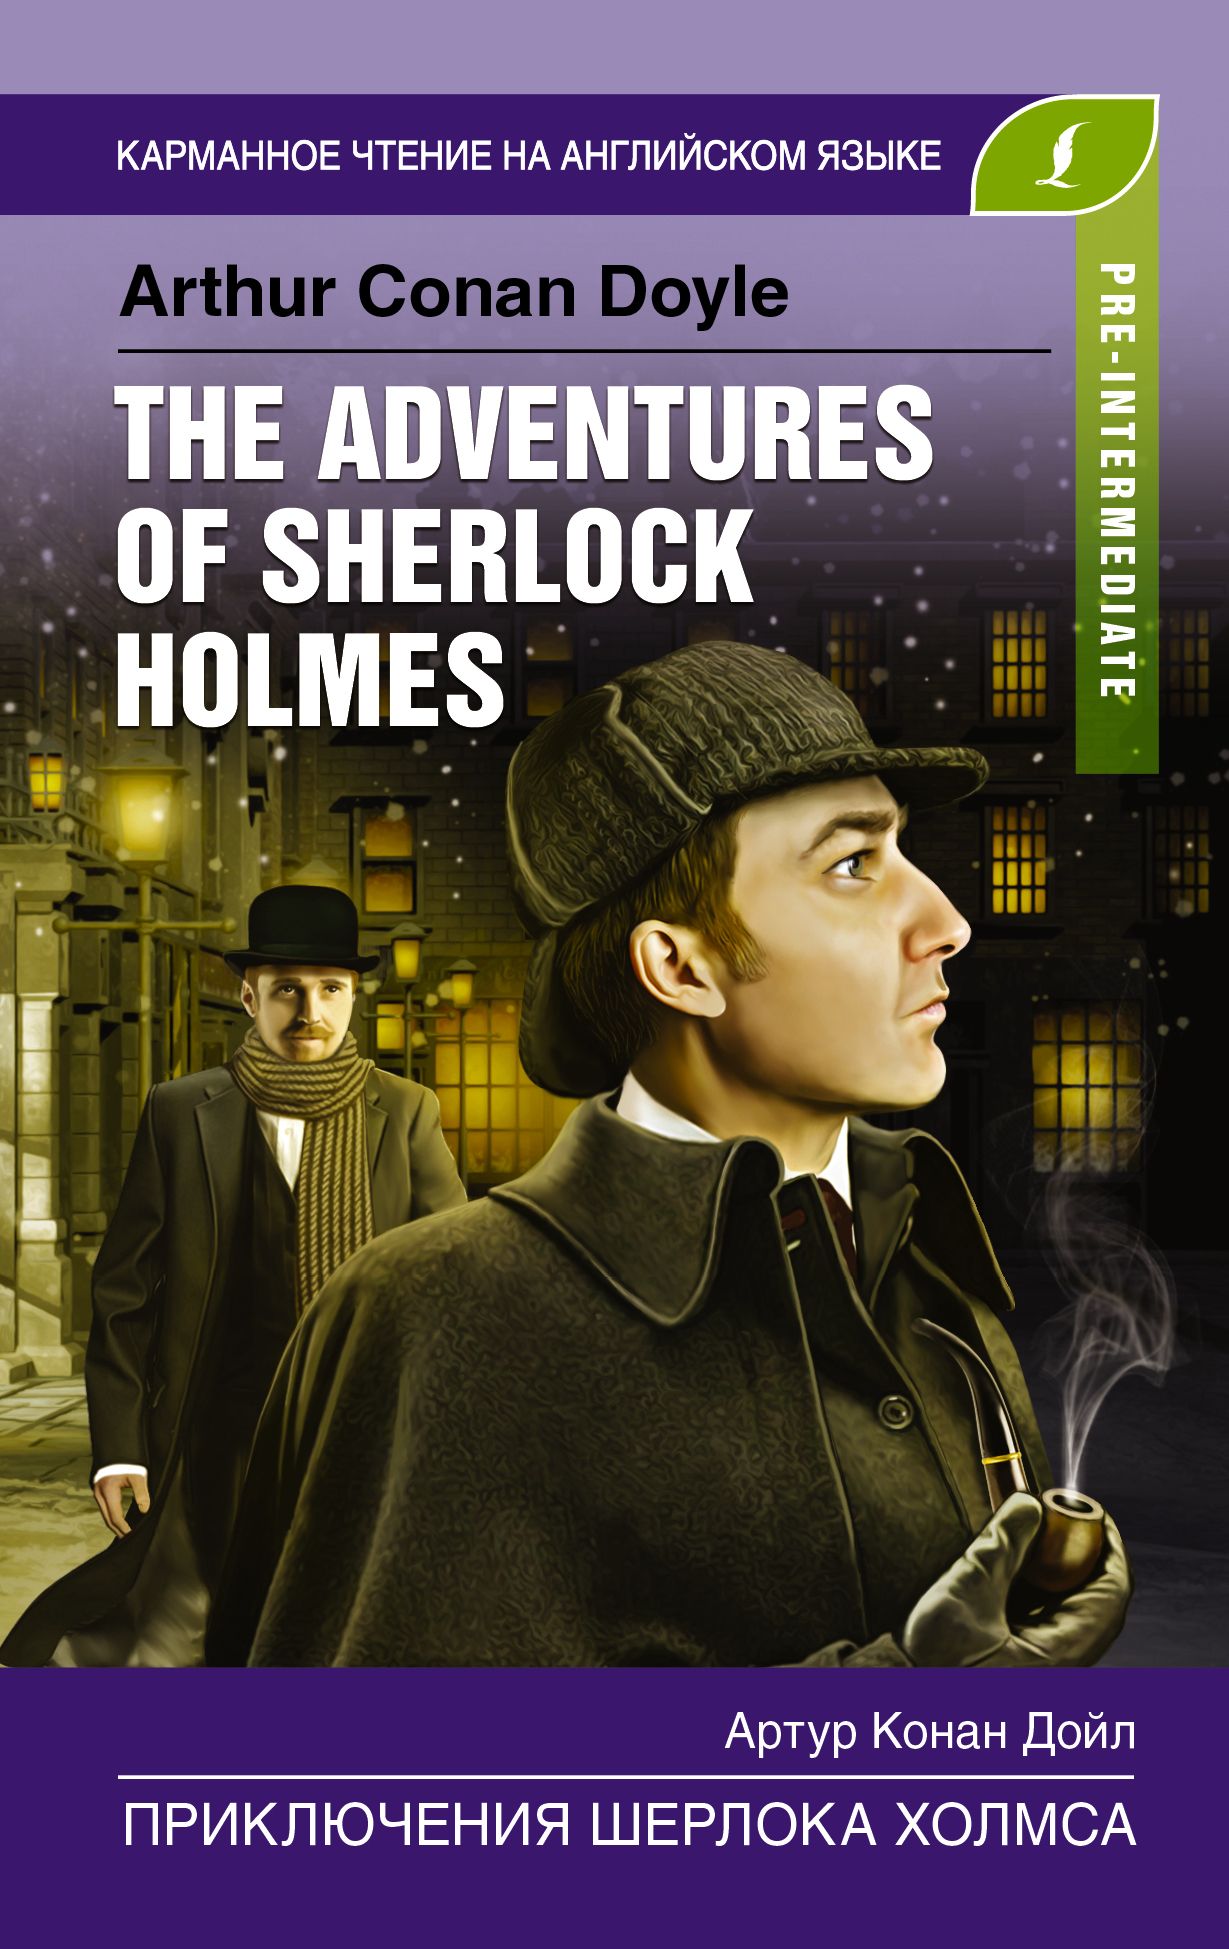 Конан дойл на английском. Приключения Шерлока Холмса the Adventures of Sherlock holmes книга.